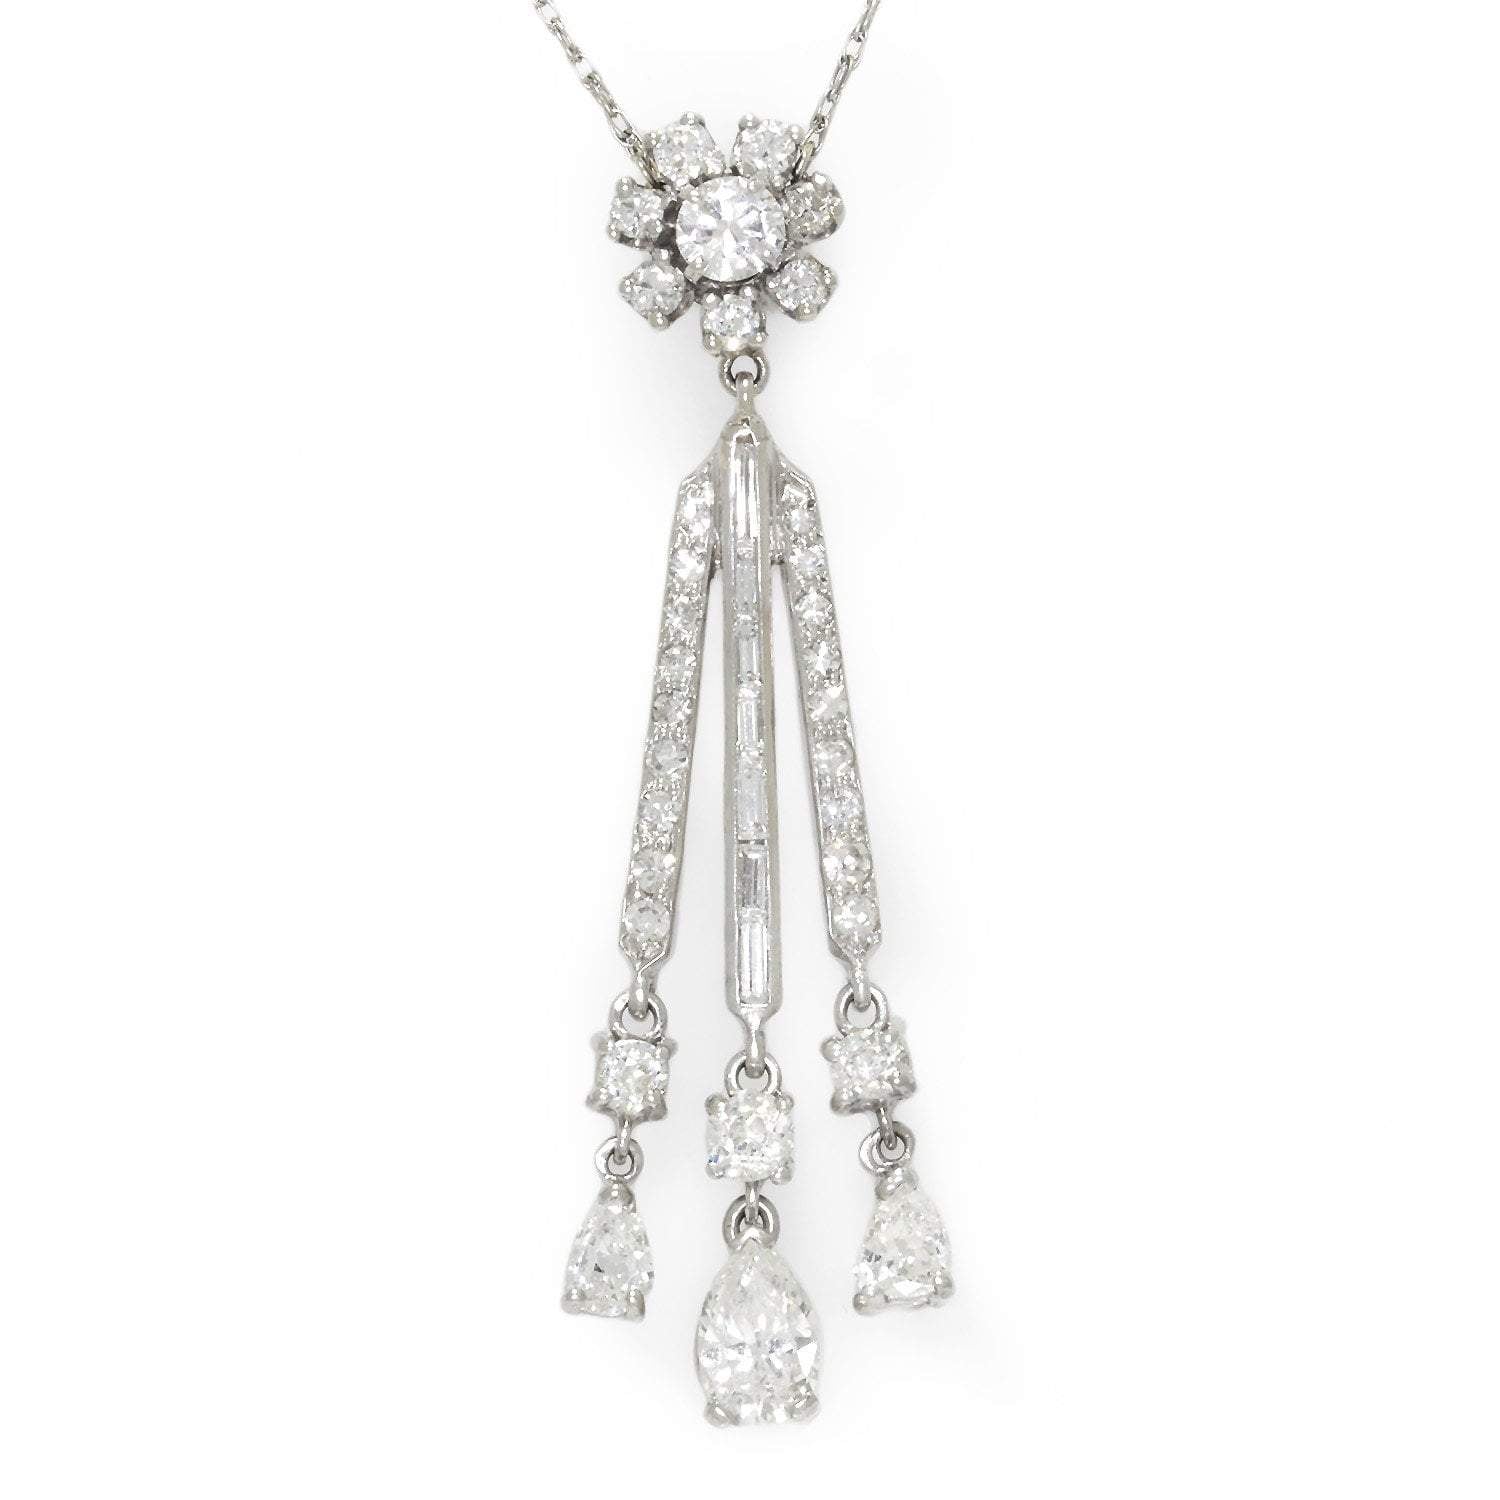 Beautiful 18k White Gold Art Deco Diamond Necklace | eBay